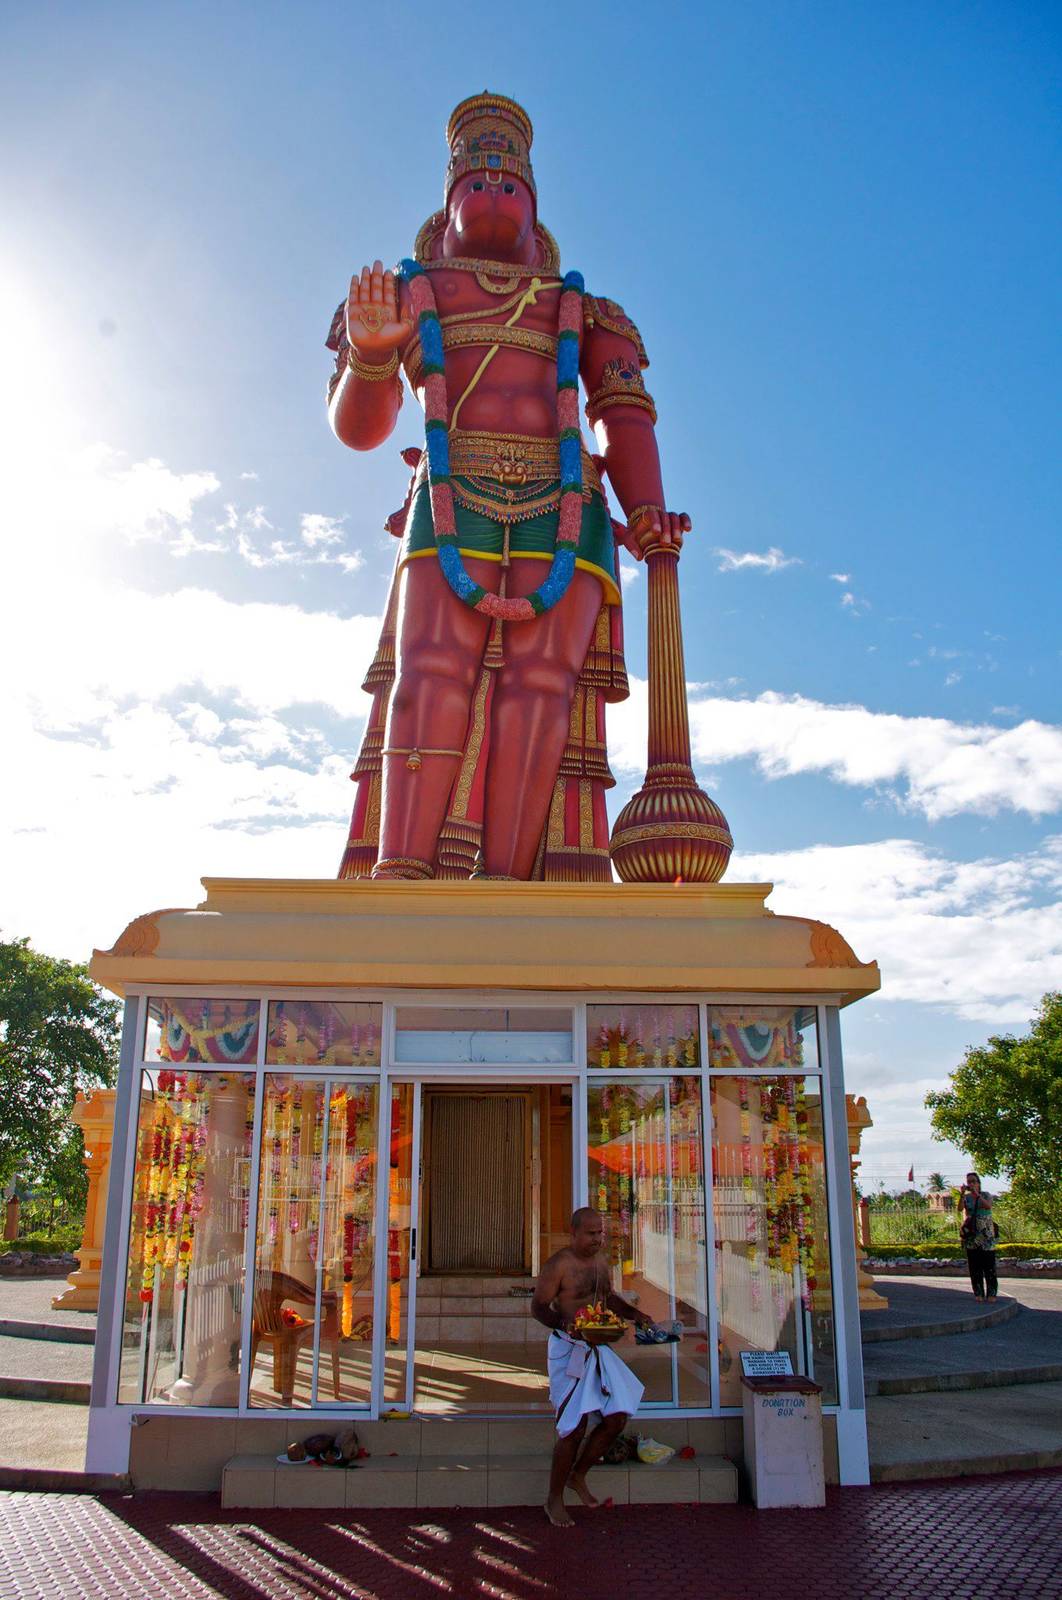 FT Hanuman Murti Destination Trinidad And Tobago Tours Holidays Vacations And Travel Guide